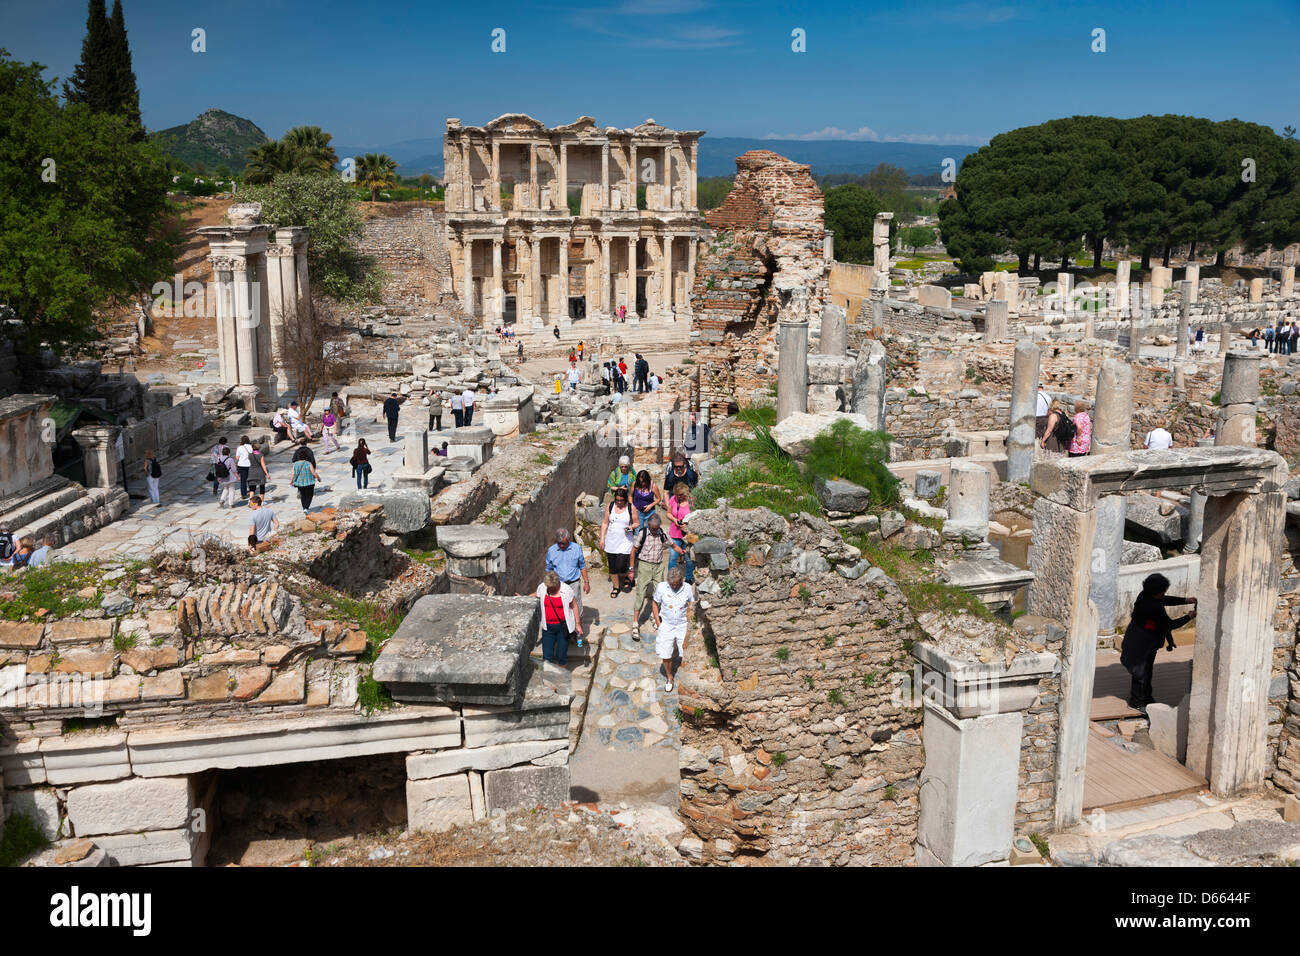 The main street in the ancient ruined city of Ephesus near Selçuk, Turkey Stock Photo